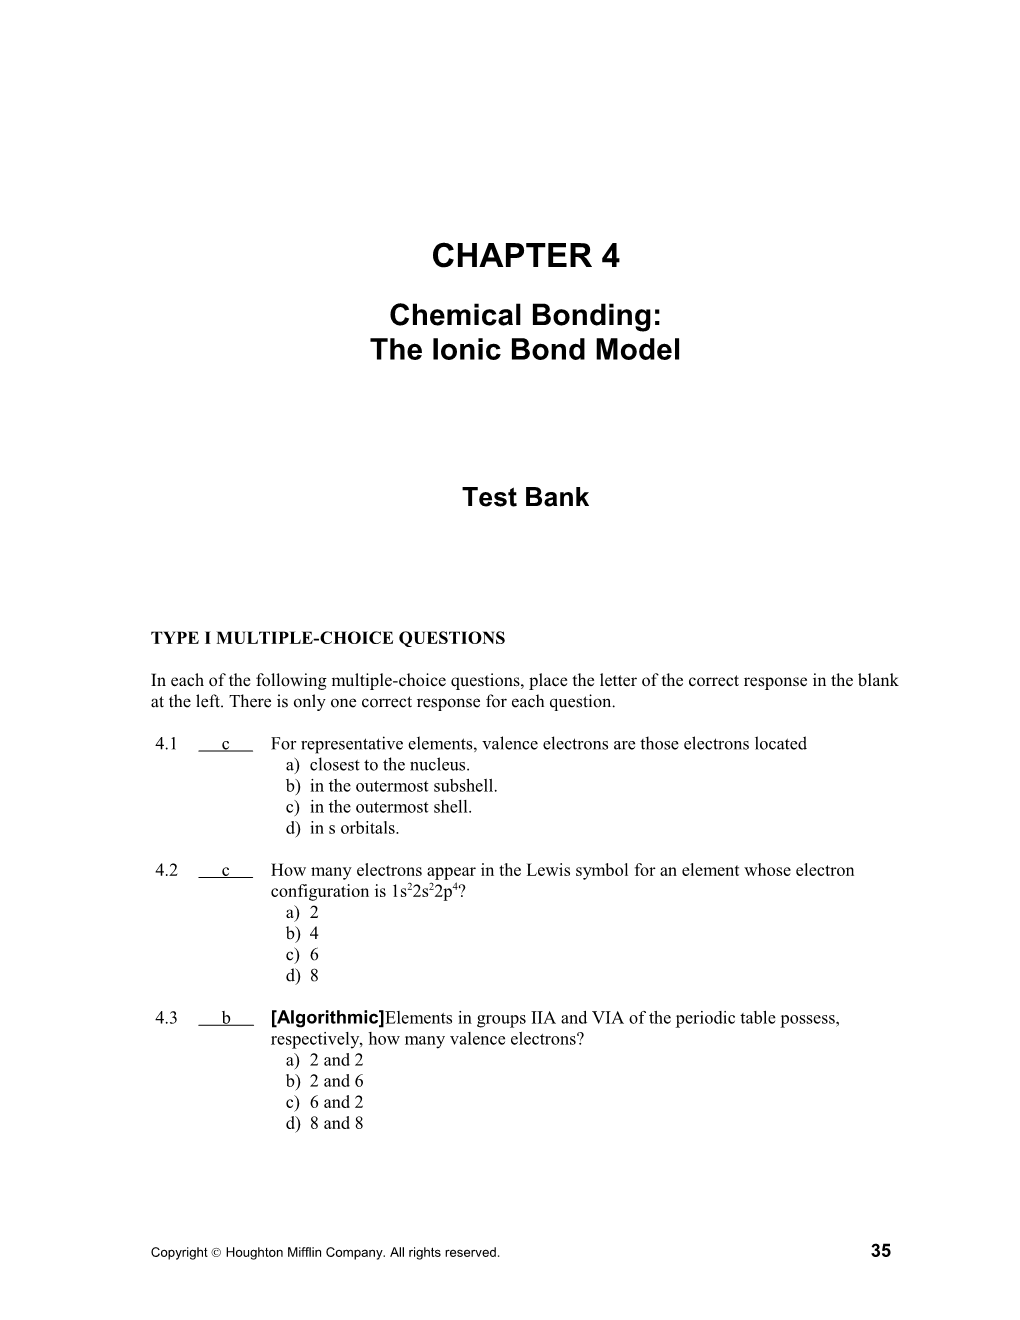 The Ionic Bond Model